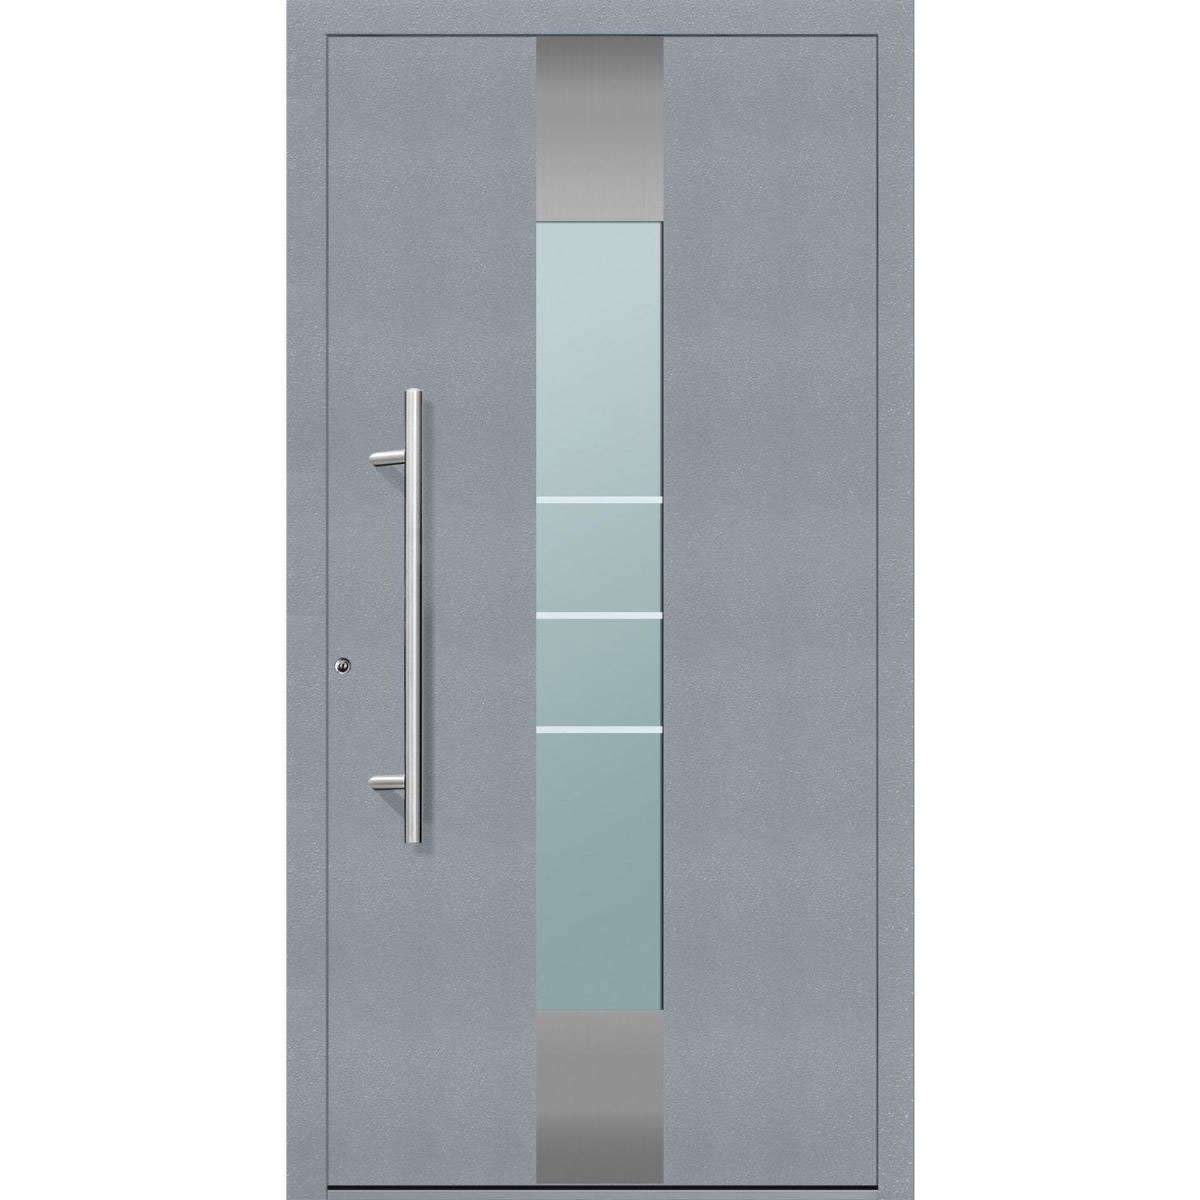 Aluminium Sicherheits-Haustür „Catania Exklusiv“, 75mm, grau, 110x210 cm, Anschlag links, inkl. Griffset